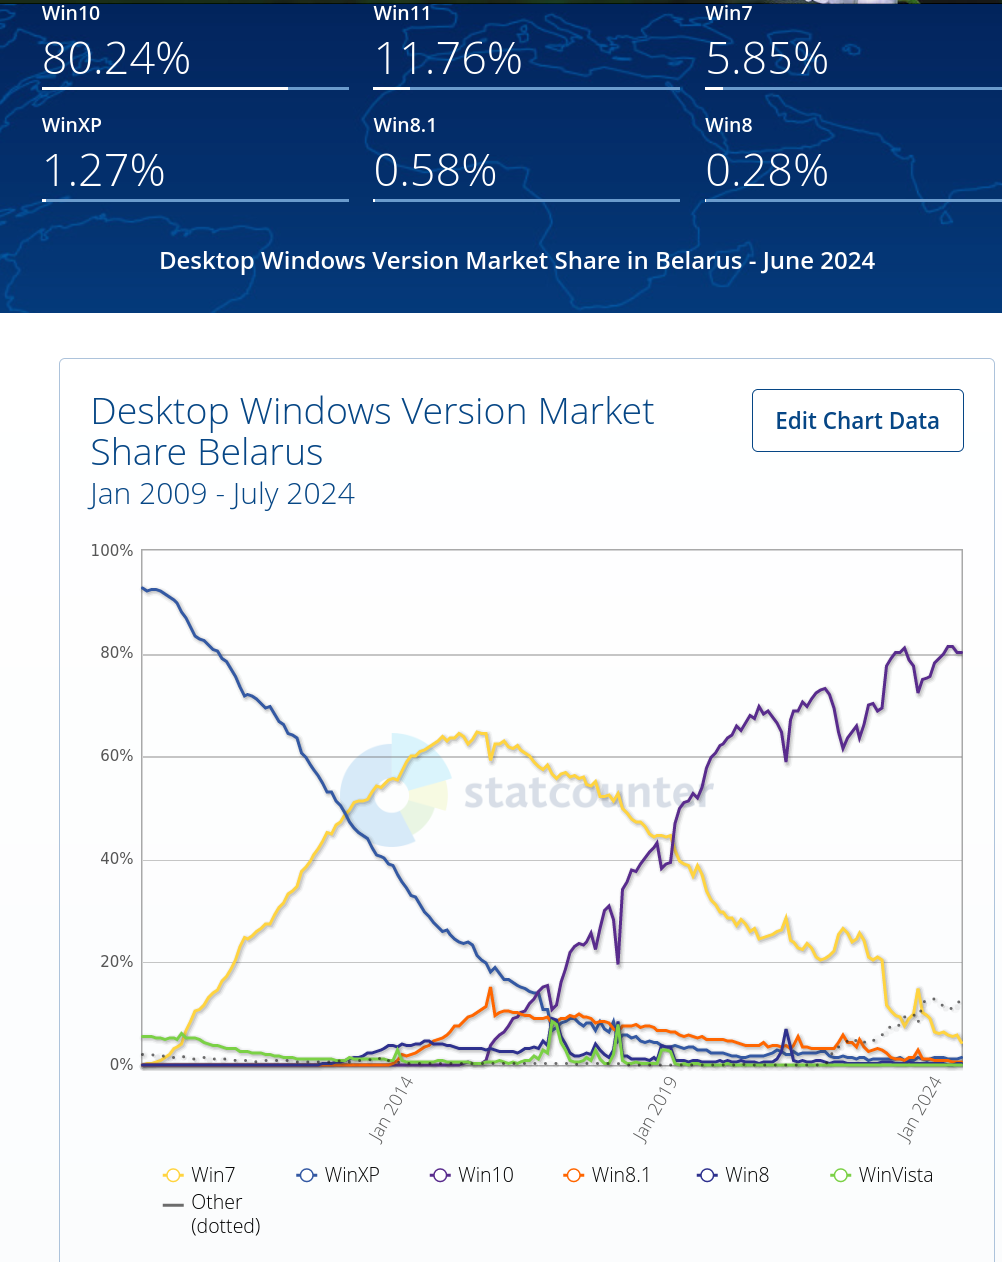 Desktop Windows Version Market Share Belarus